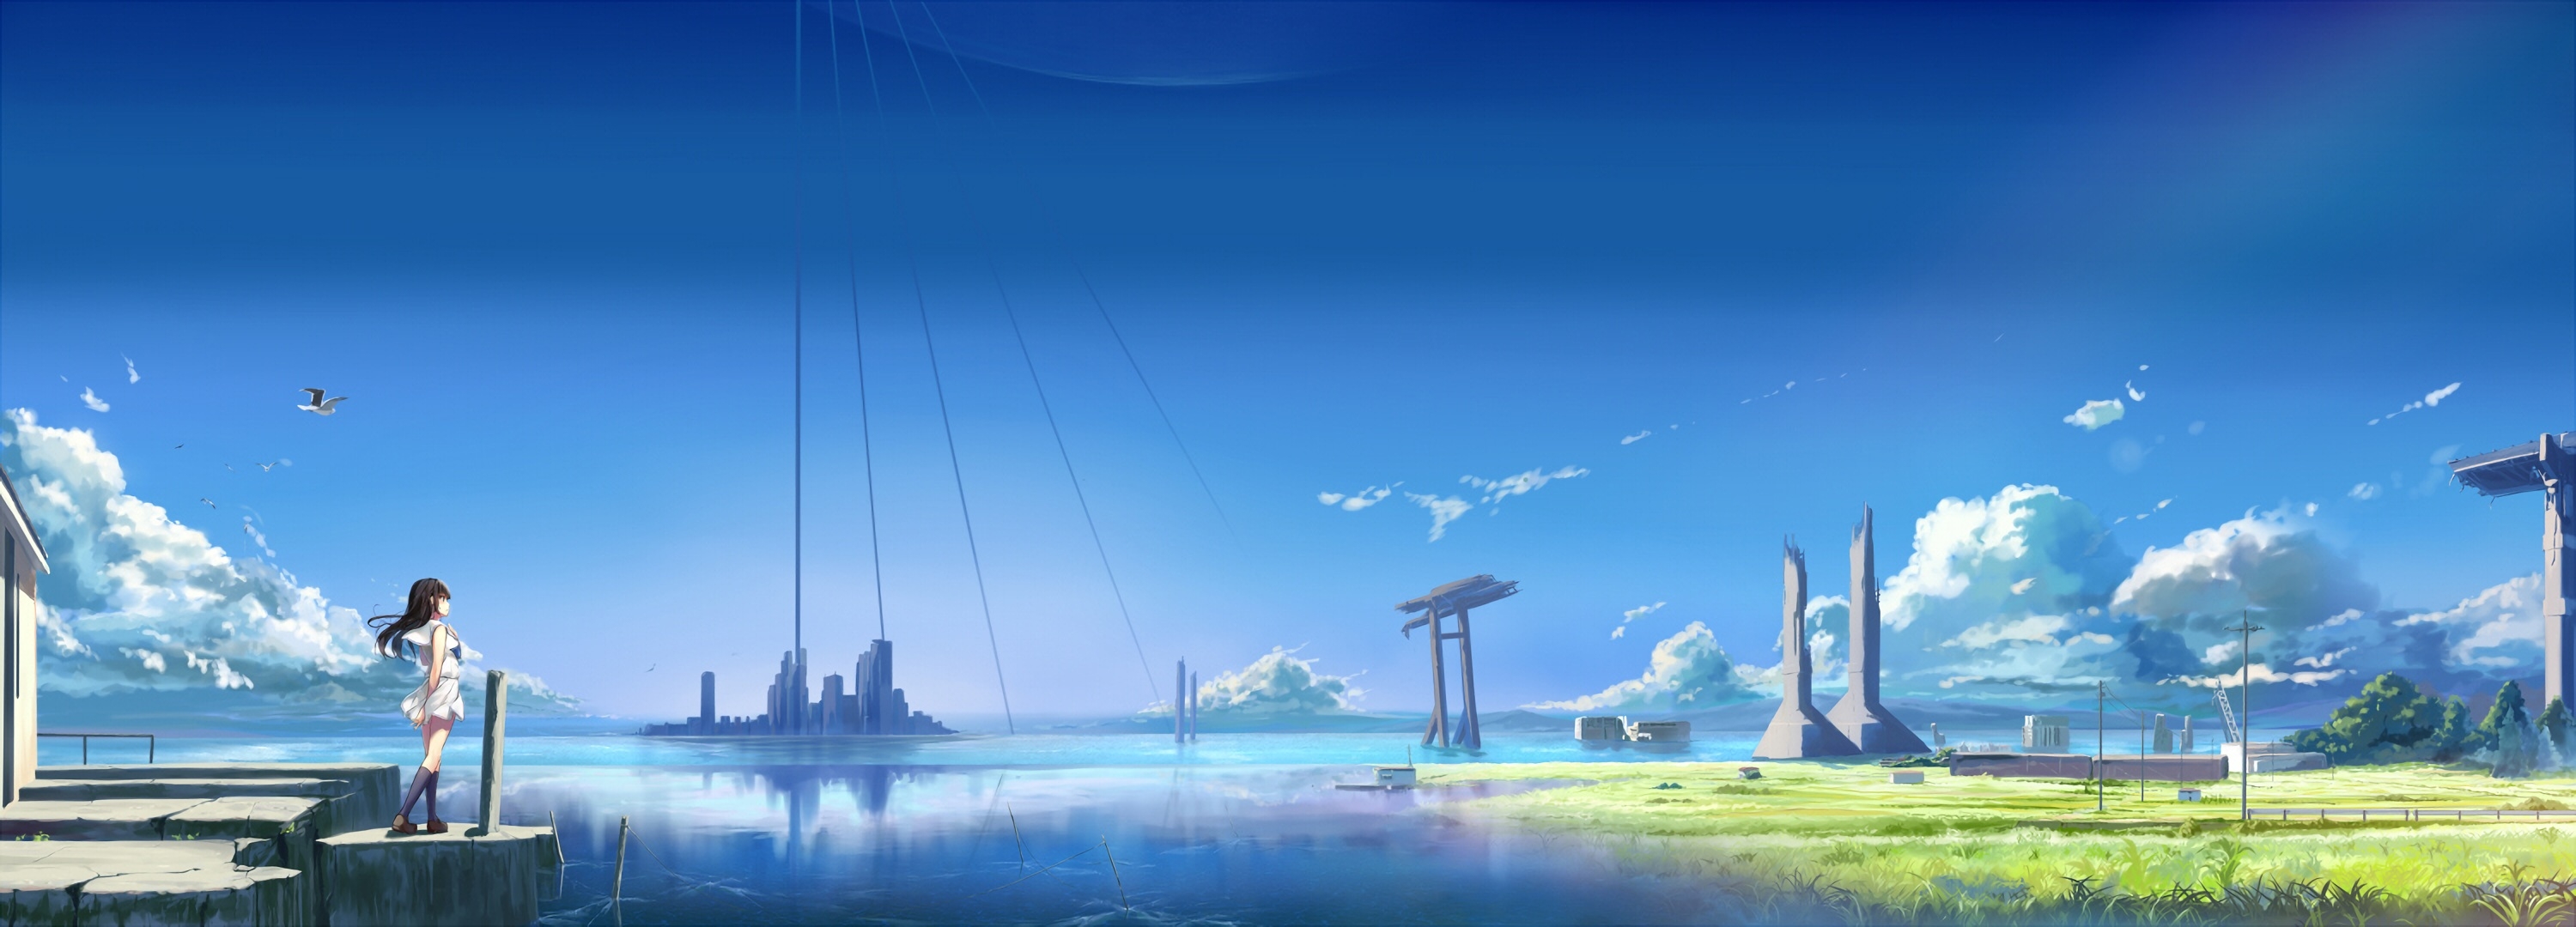 Wallpapers wallpaper anime girl landscape clear skies on the desktop